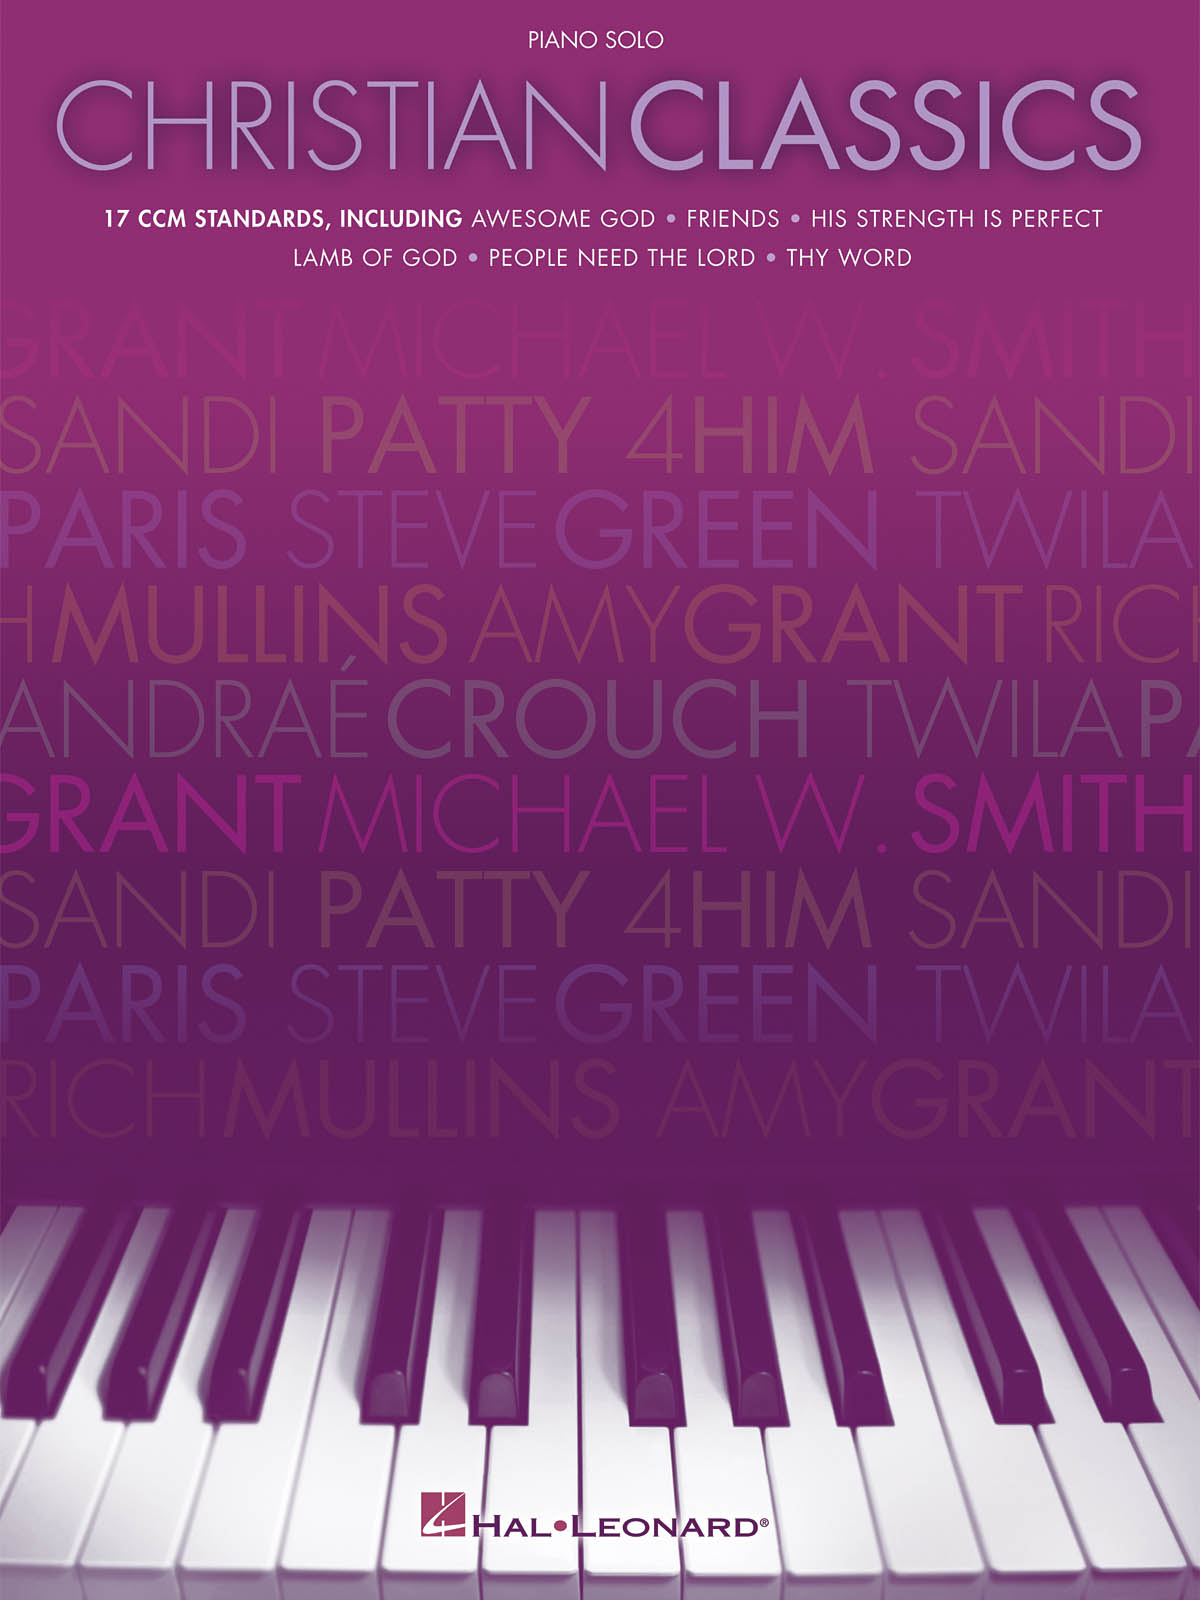 piano instrumental worship mp3 free download